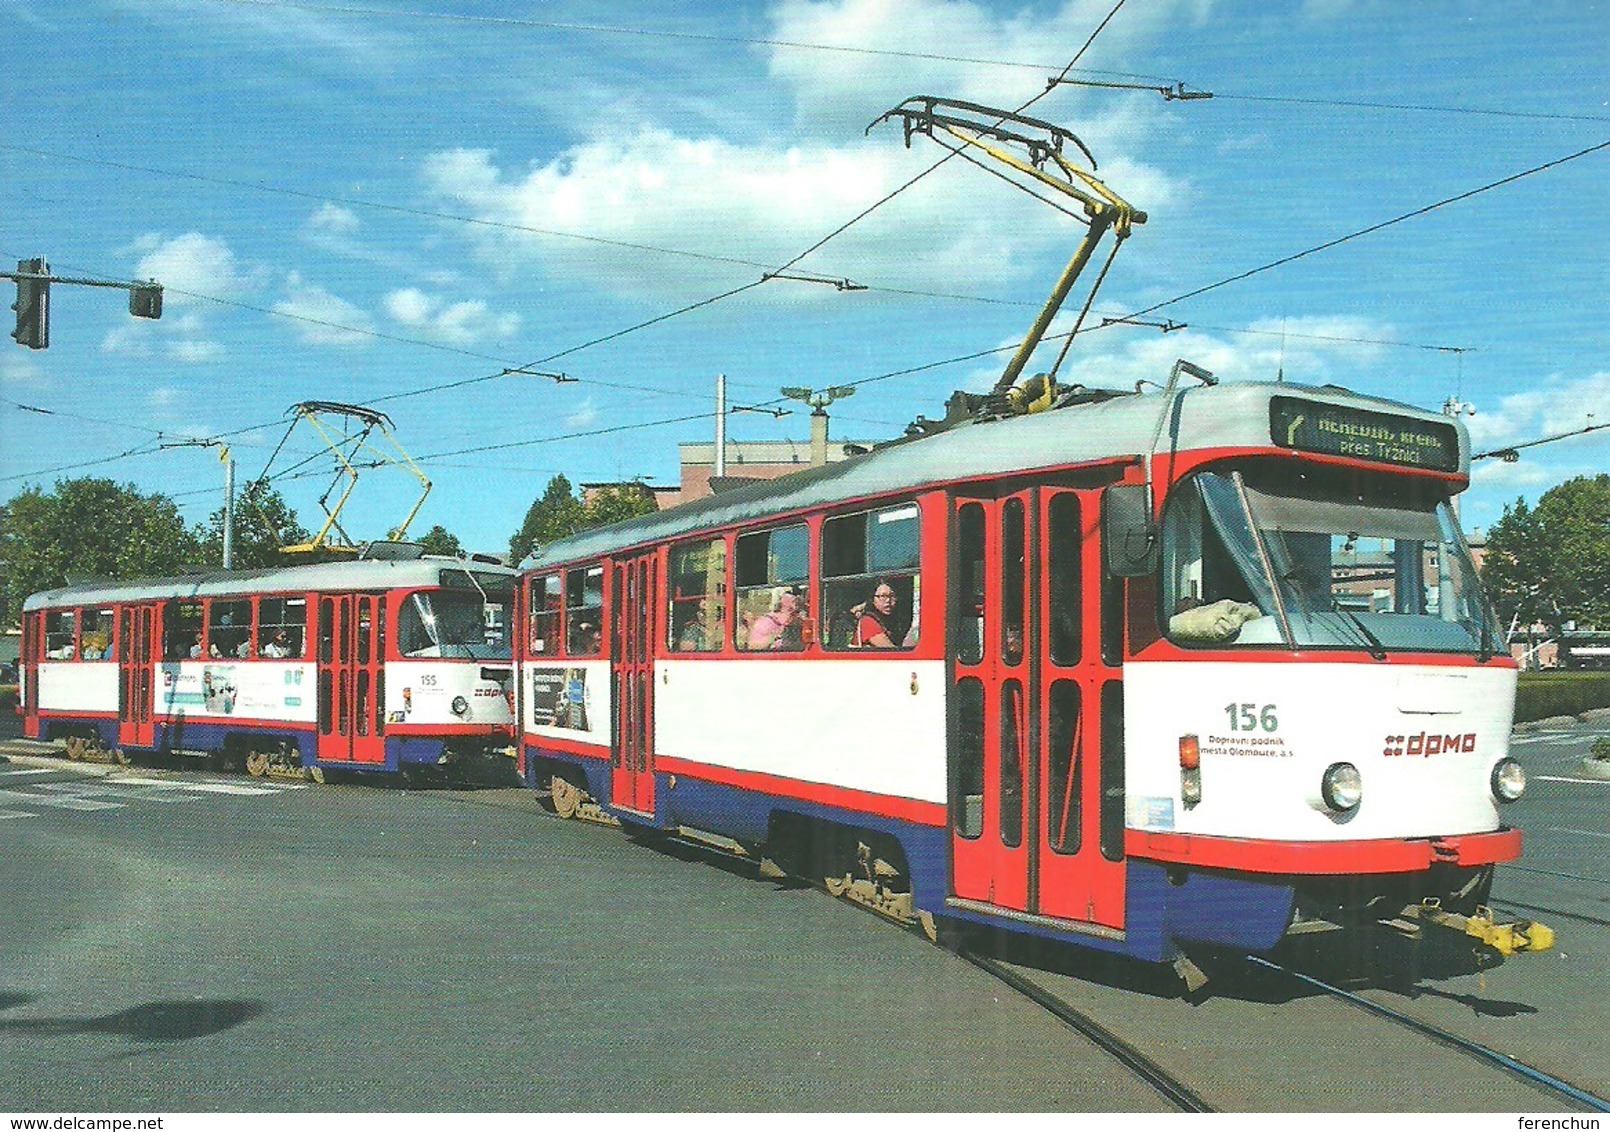 TRAM * TRAMWAY * RAIL * RAILWAY * RAILROAD * TATRA * DPMO * OLOMOUC * CZECH REPUBLIC * Top Card 0491 * Hungary - Tramways